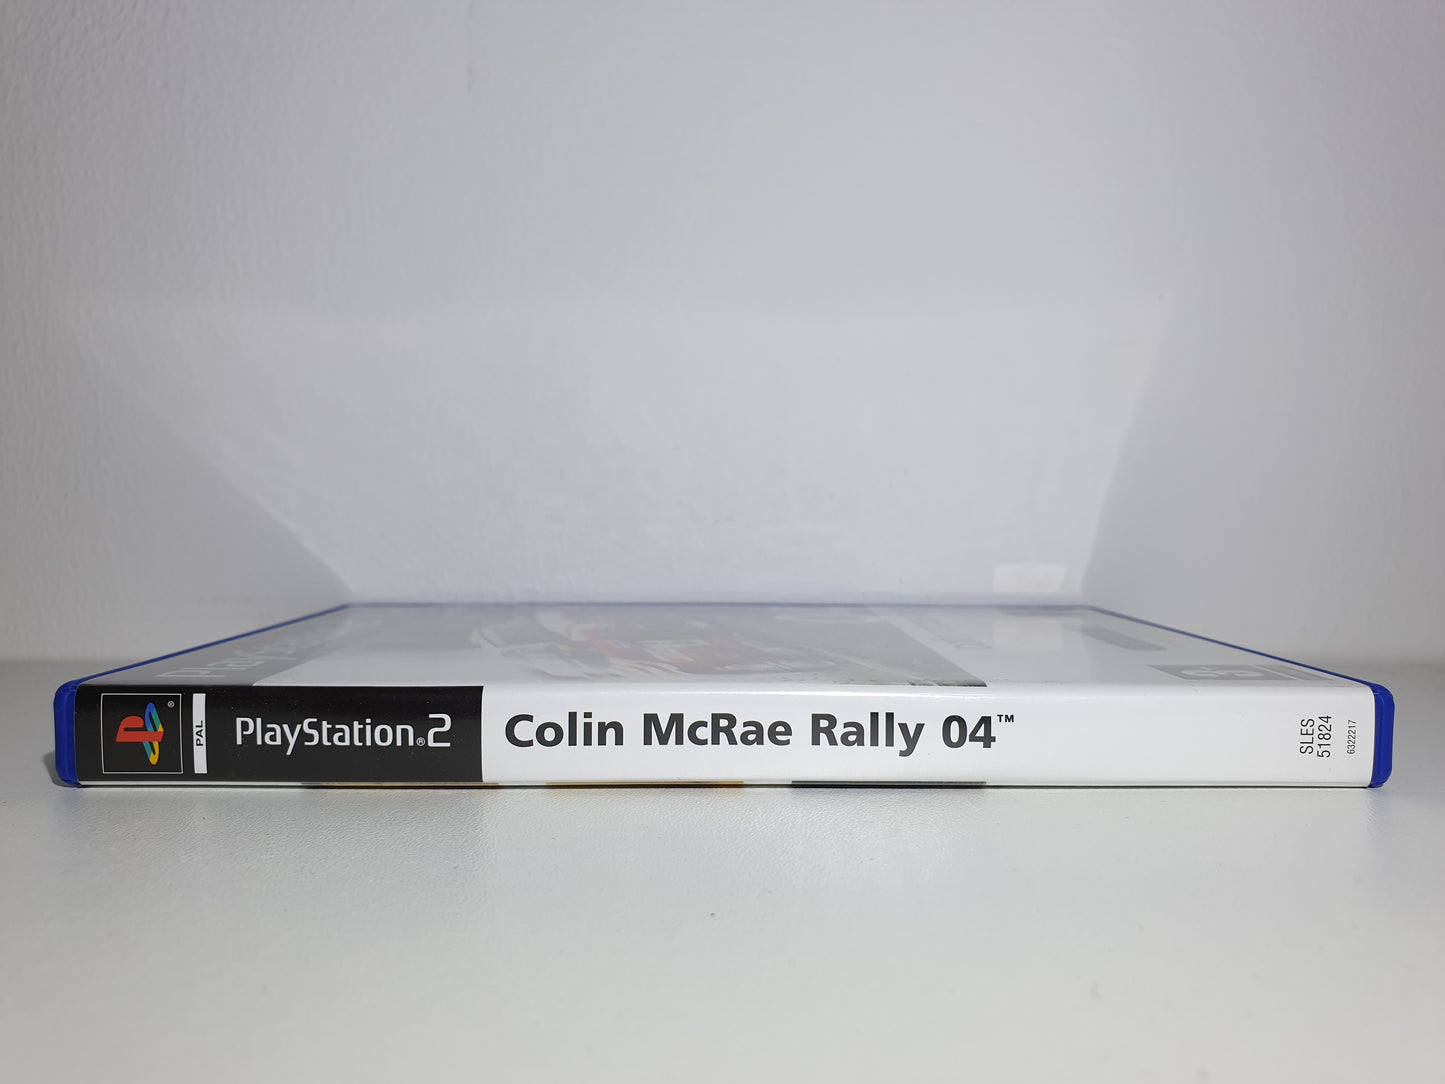 Colin McRae Rally 04 PS2 - Occasion excellent état